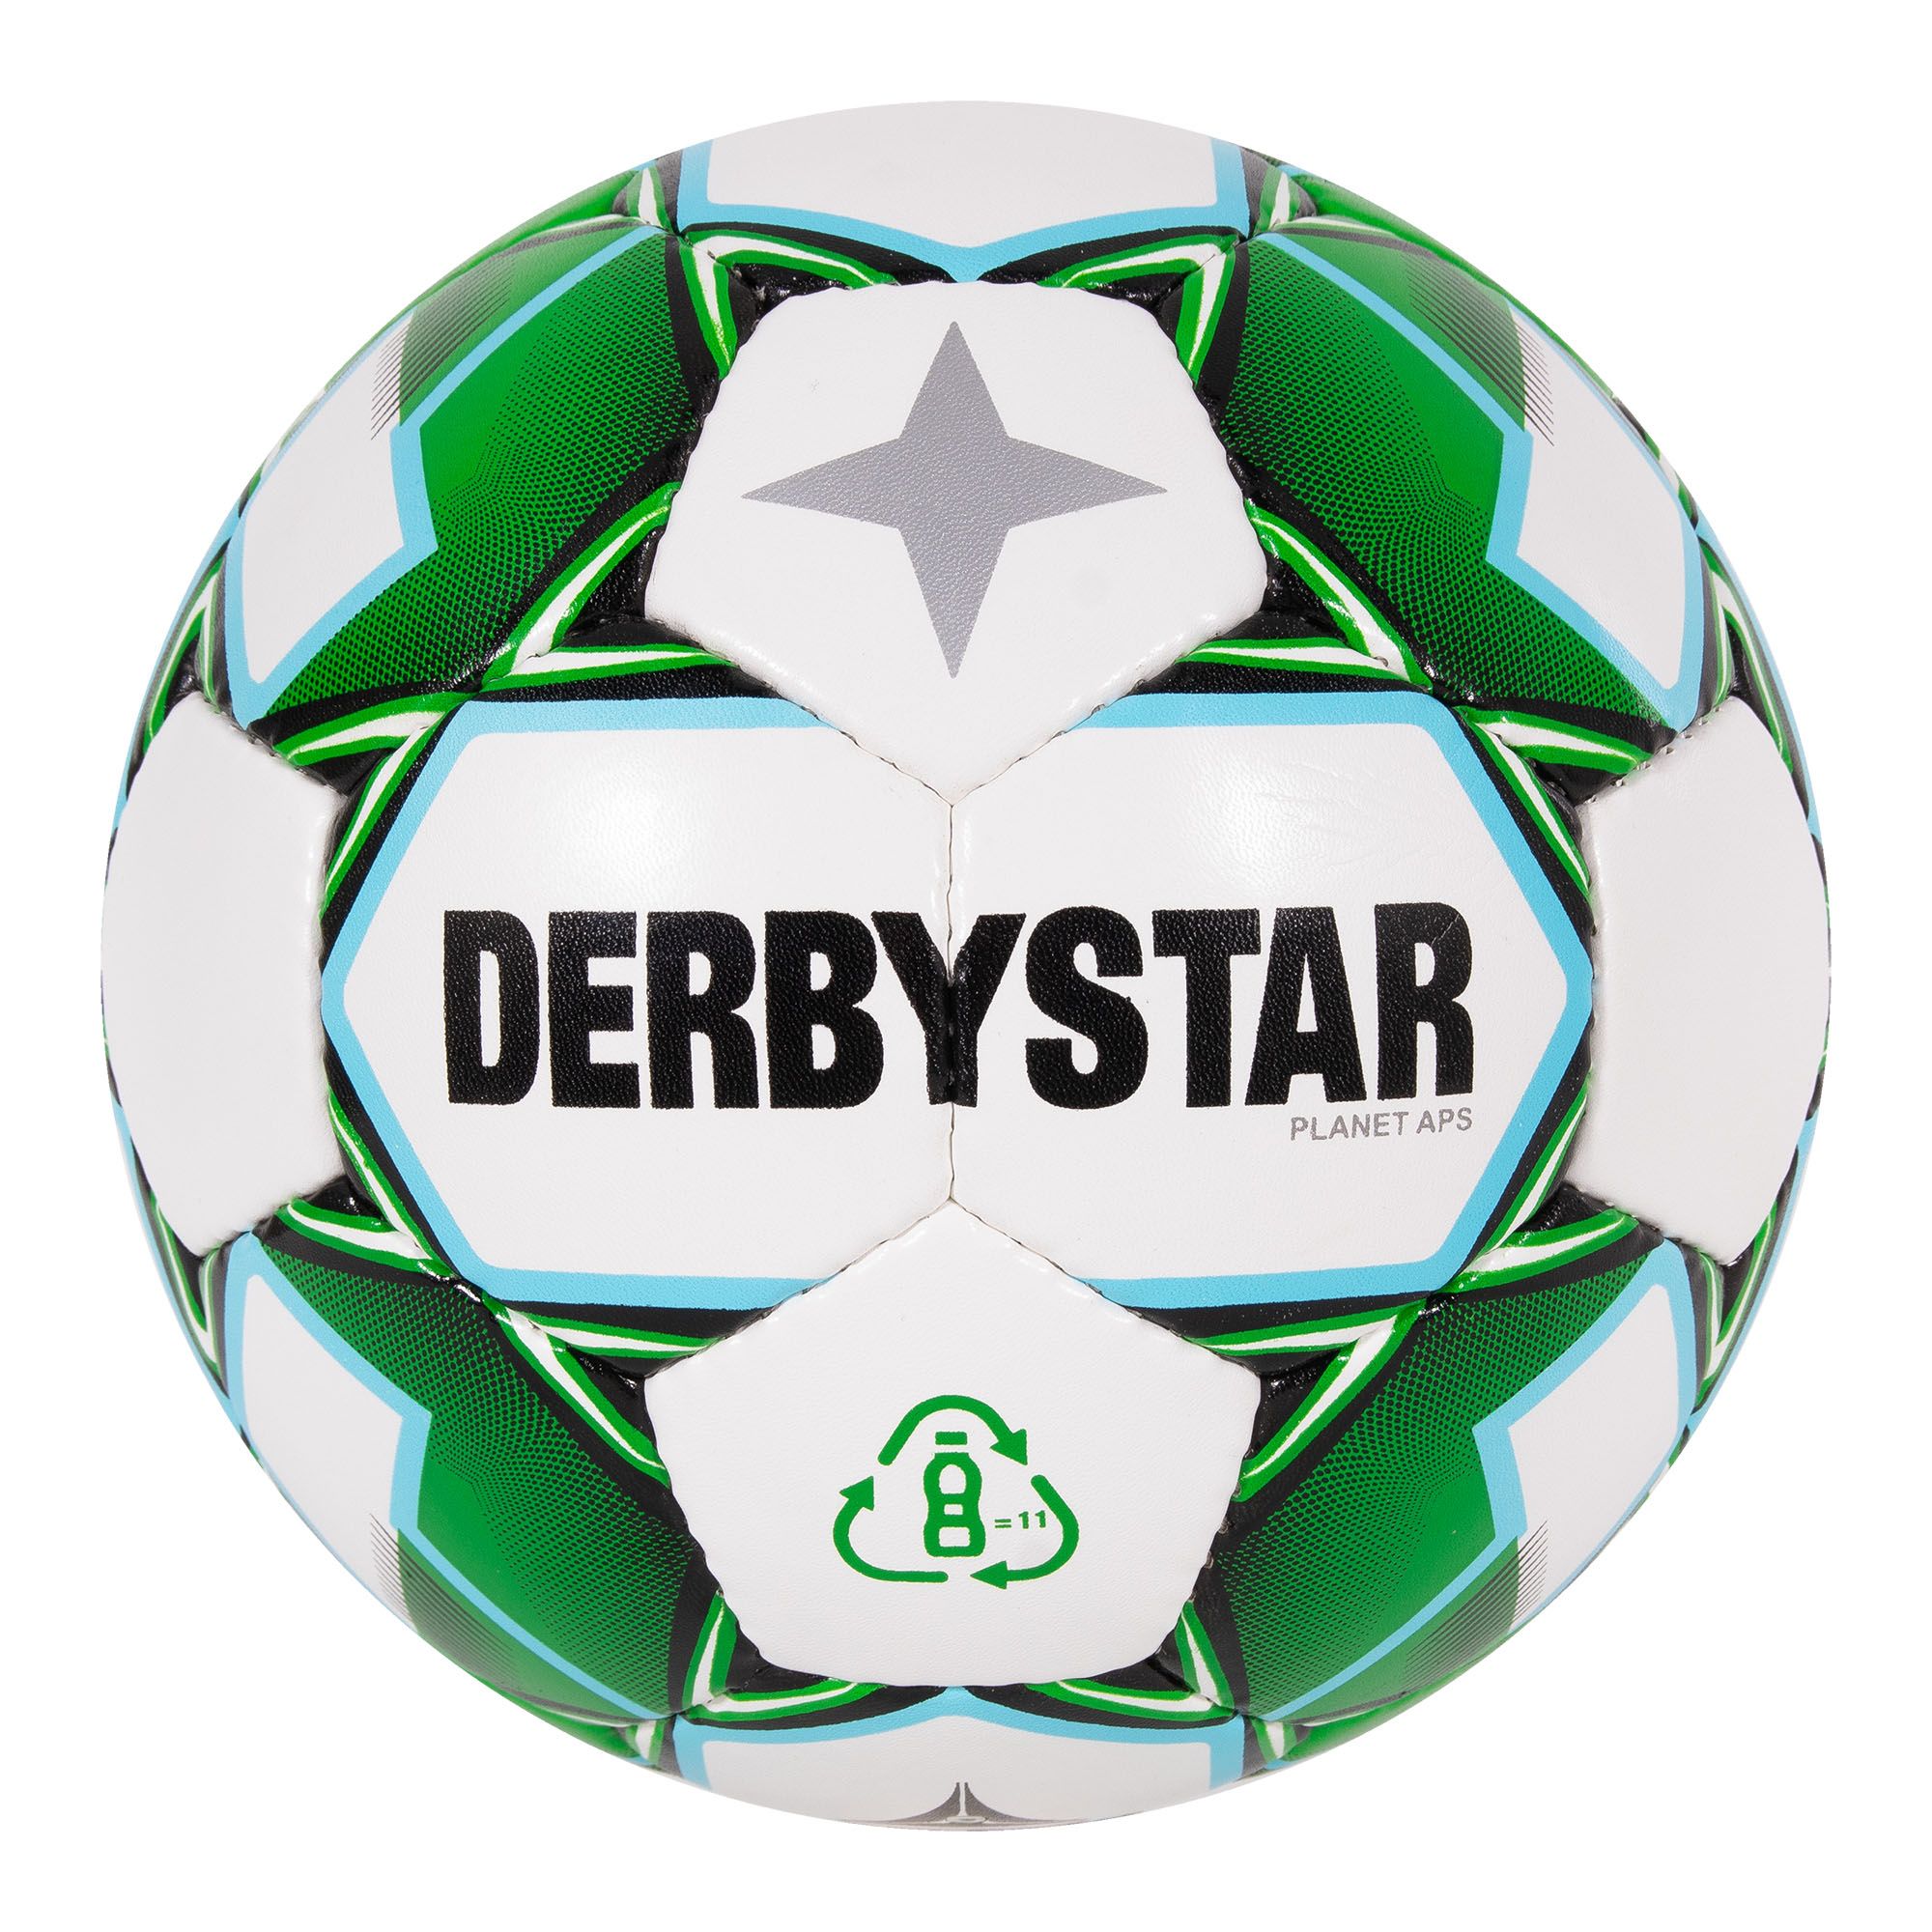 Vaderlijk Melodieus werkgelegenheid BKS sport | Derbystar voetballen | Derbystar Planet APS